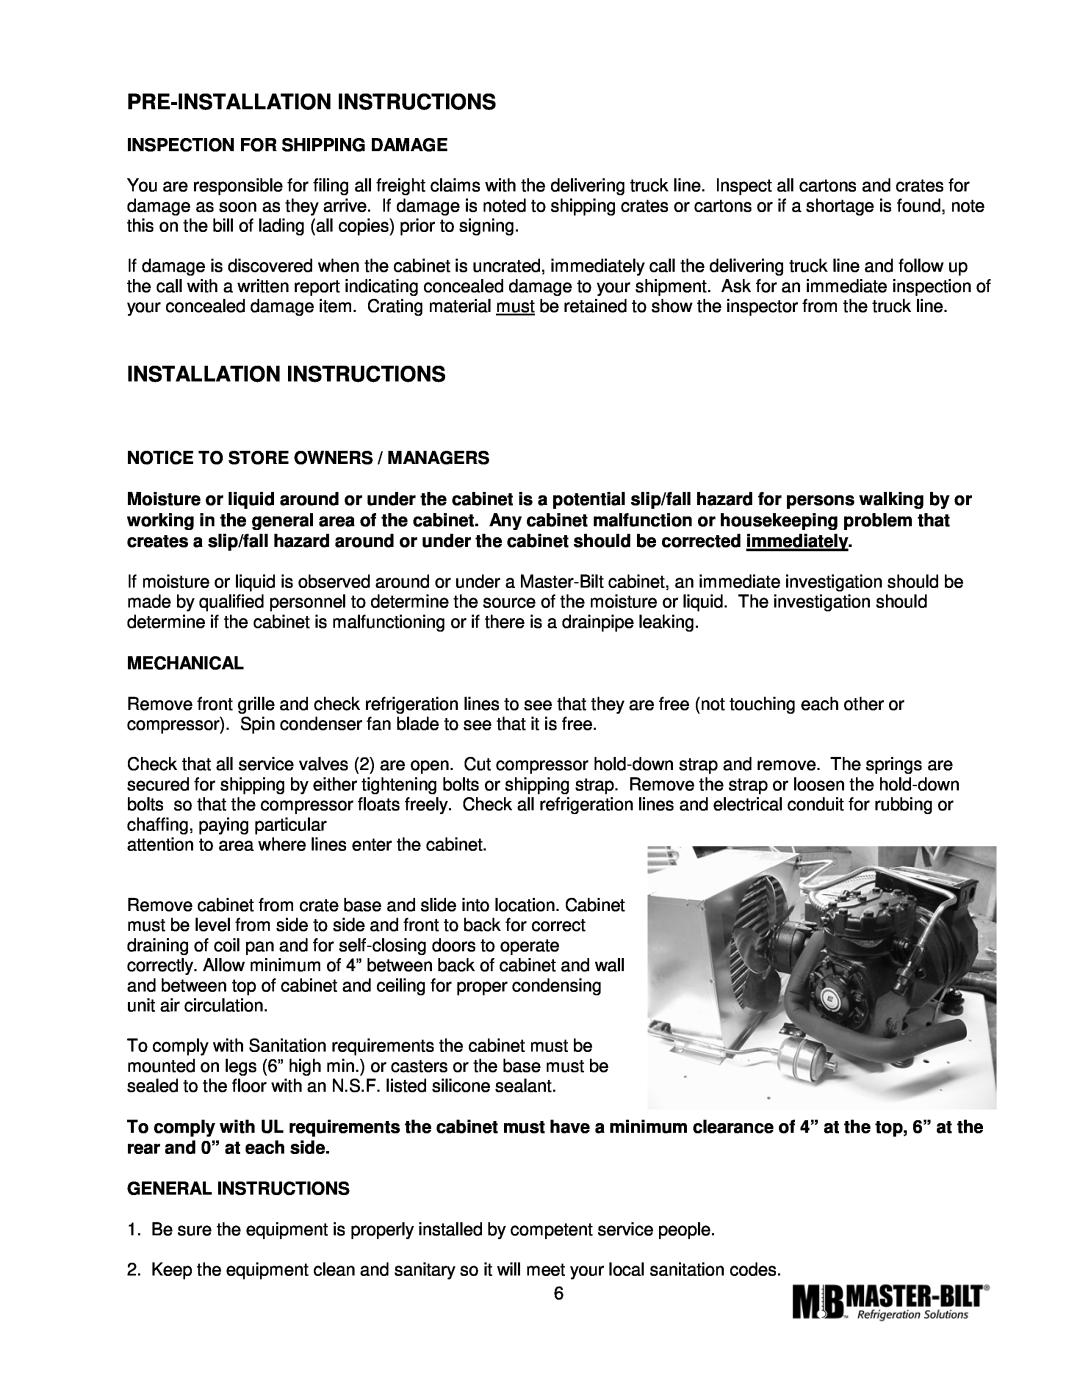 Master Bilt TAF-48 ERC2 manual Pre-Installationinstructions, Installation Instructions, Inspection For Shipping Damage 